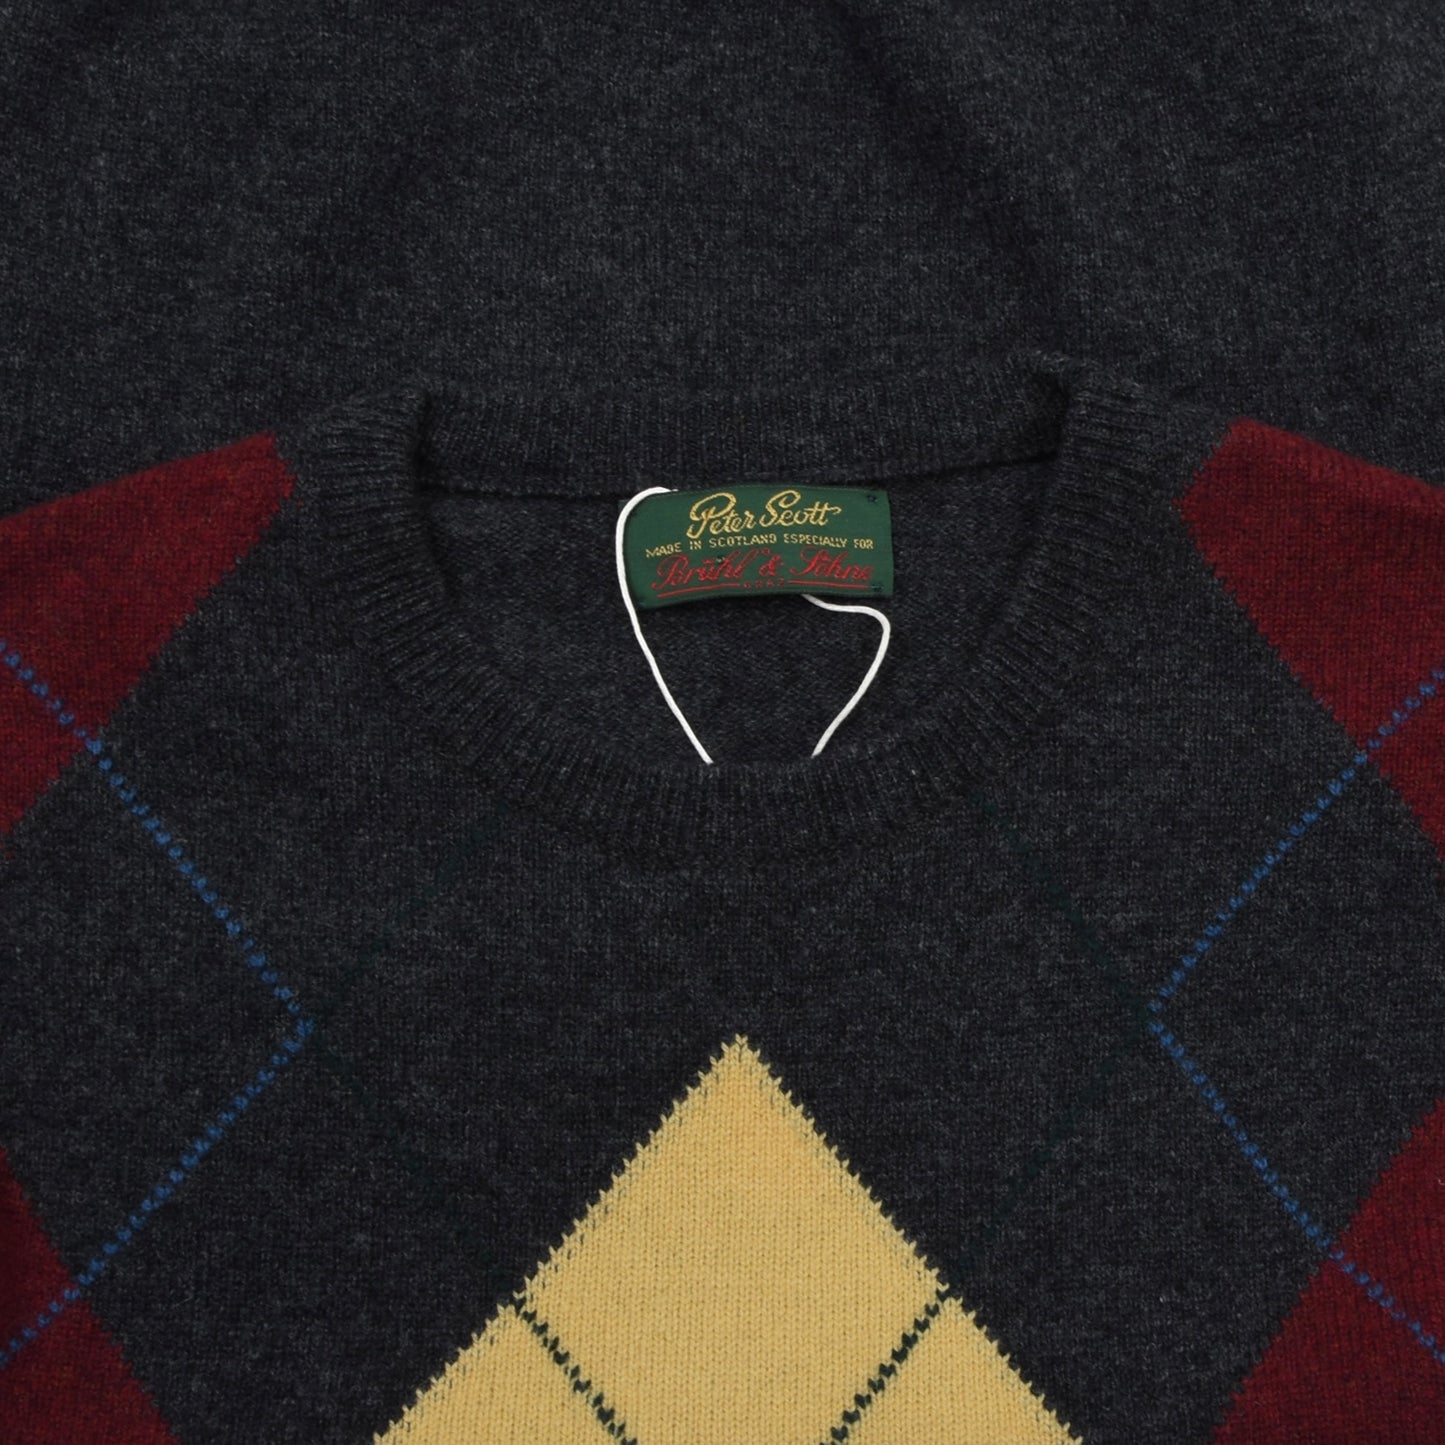 Peter Scott Wool Sweater Size UK40 Chest ca. 55cm - Grey Argyle